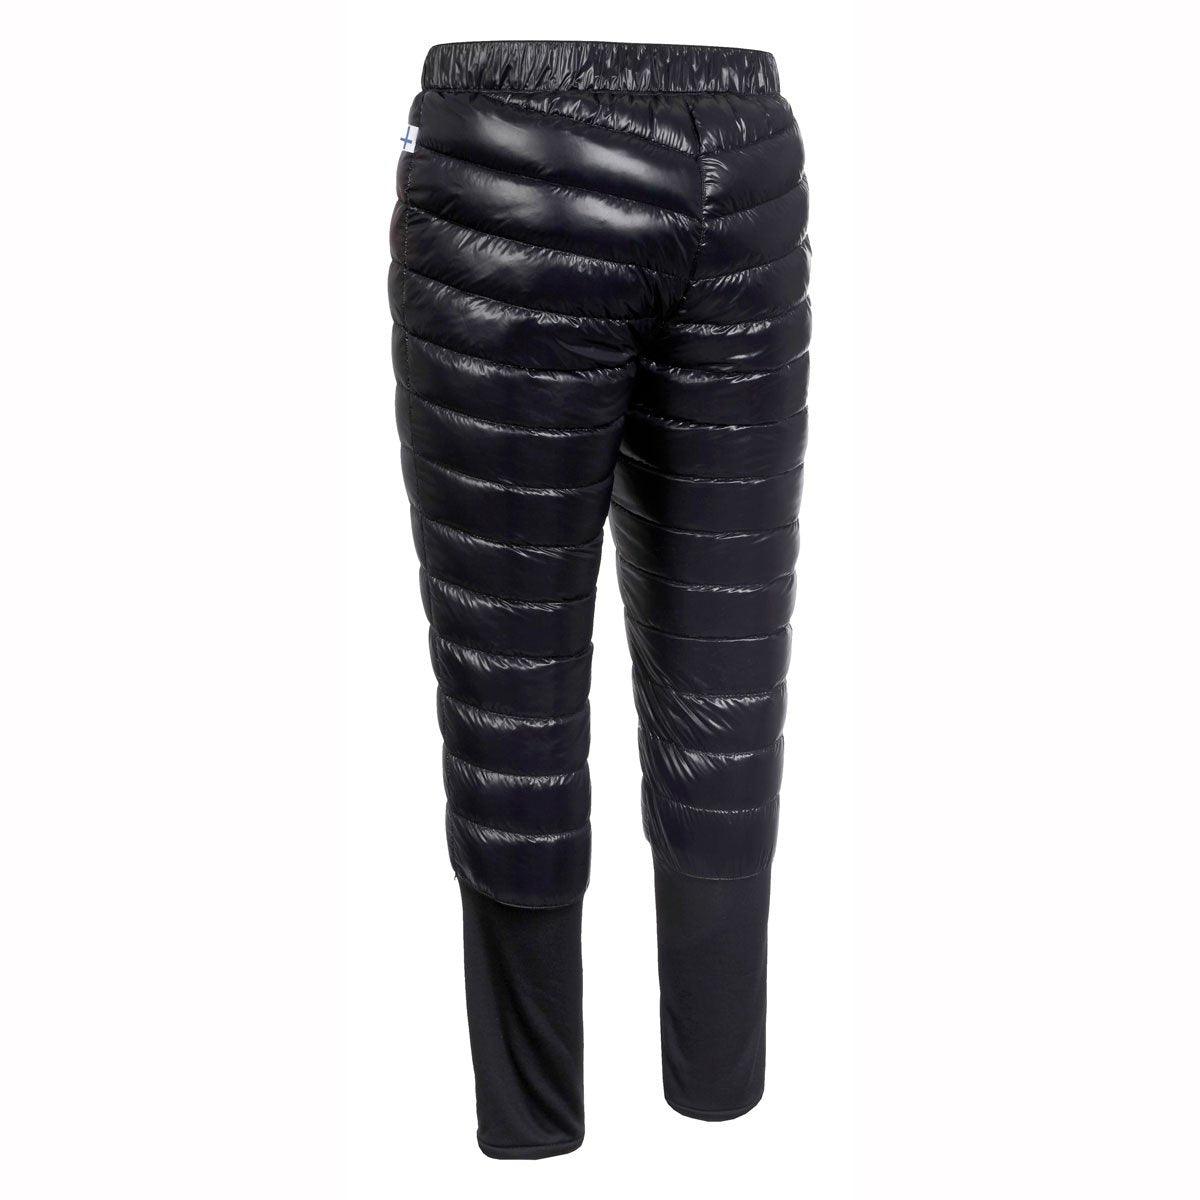 Rukka Nivala GoreTex Textile Jeans  Black  FREE UK DELIVERY